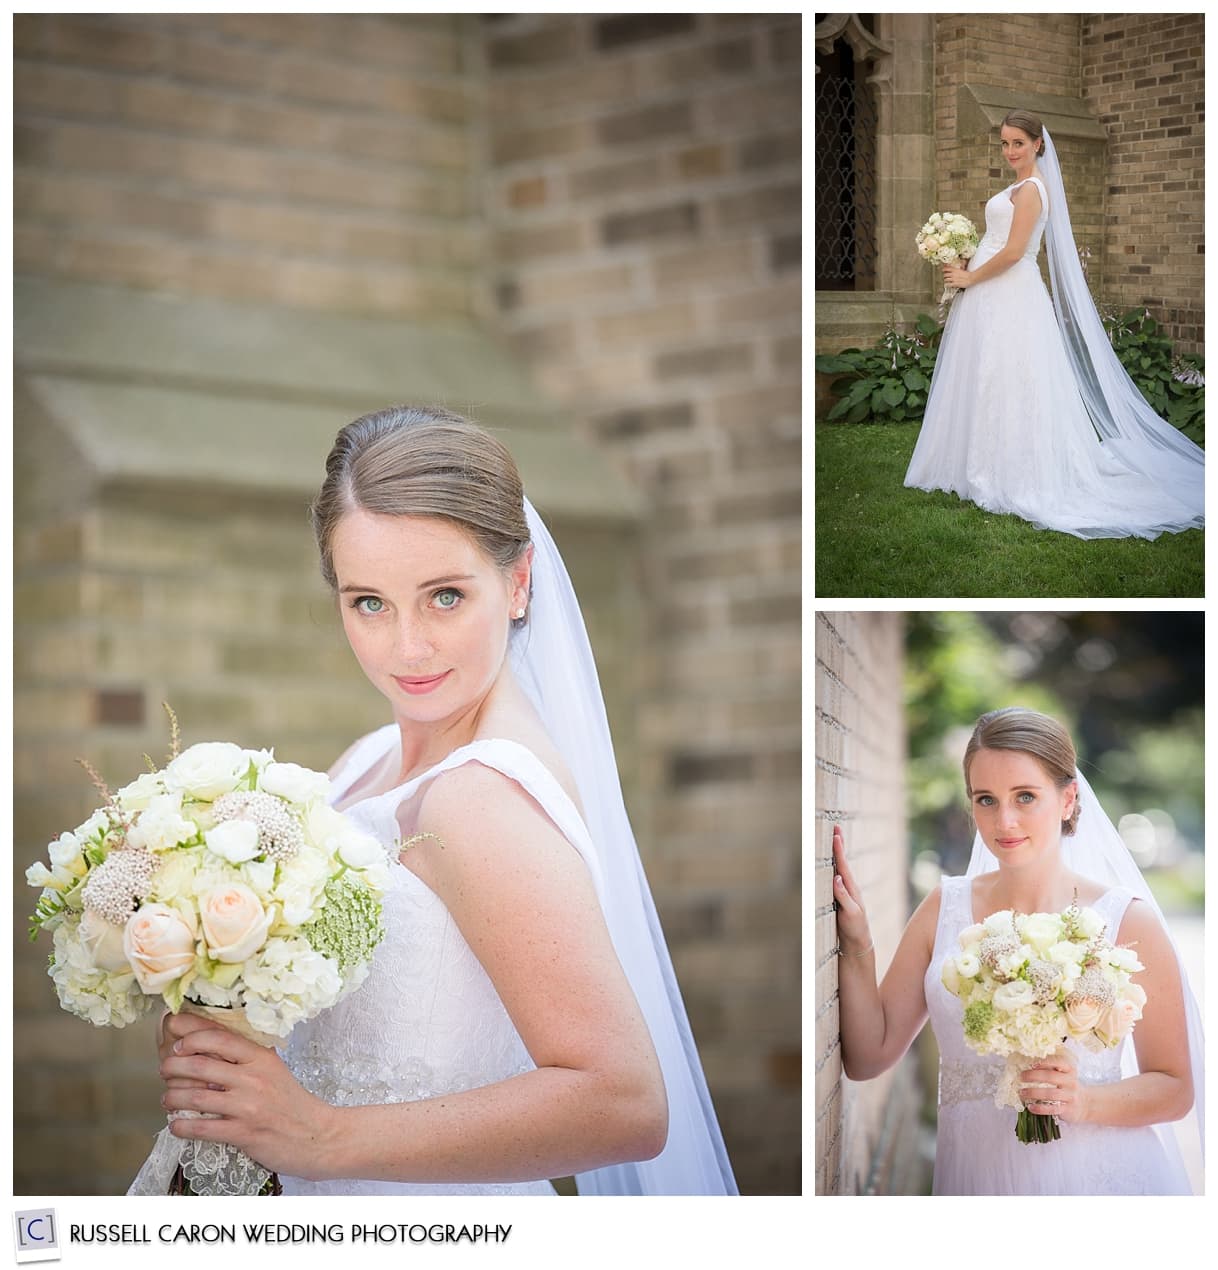 Beautiful bridal portrait photos